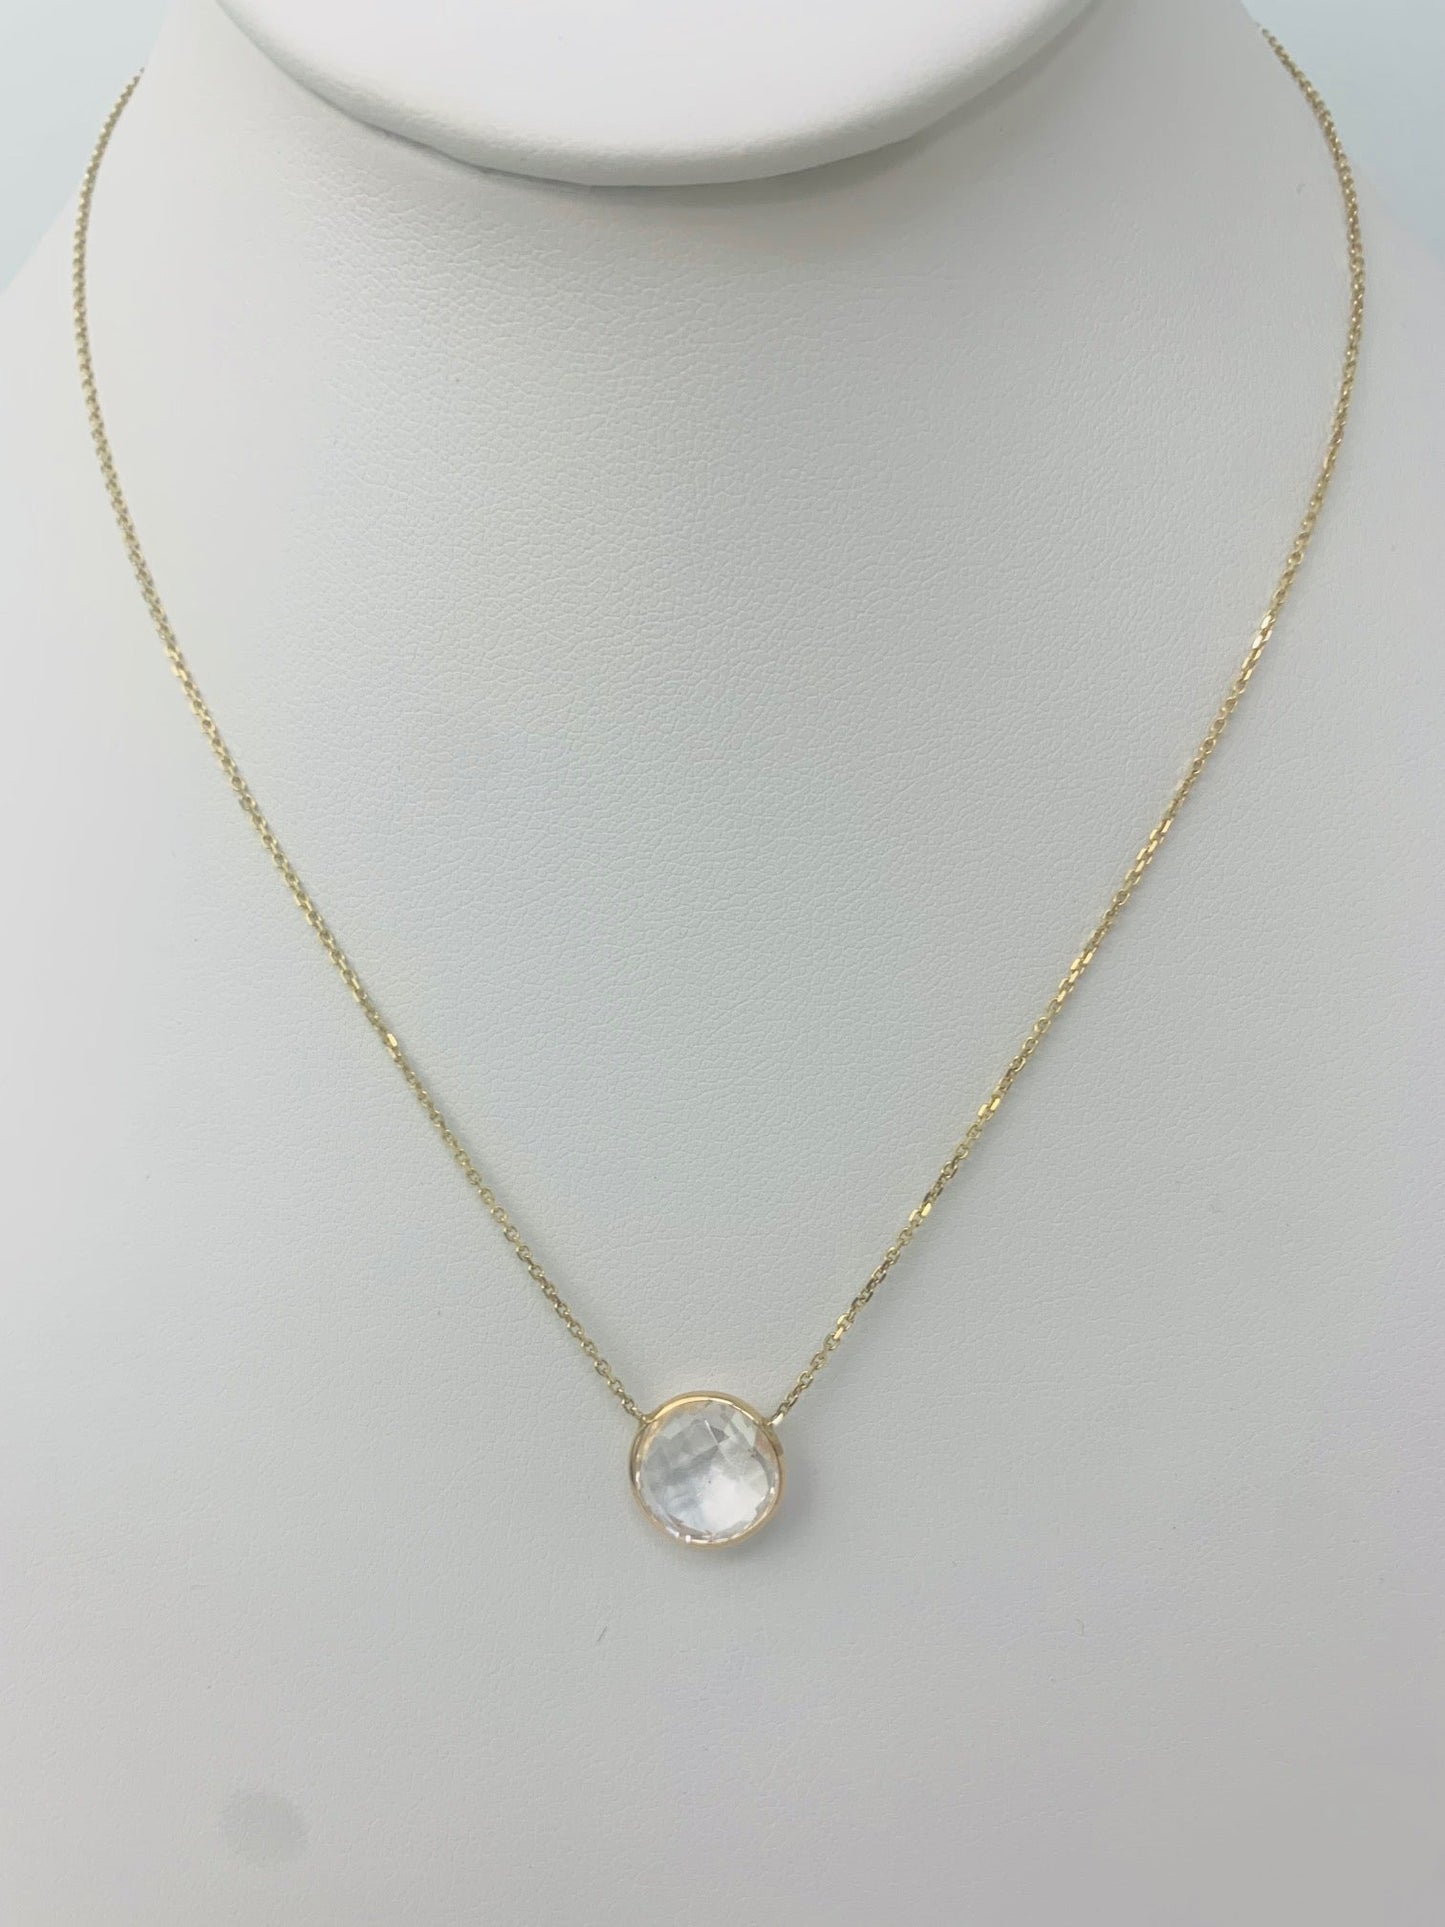 16" 10mm Crystal Quartz Single Bezel Necklace in 14KY - NCK-150-BZGM14Y-CRQ-16-10